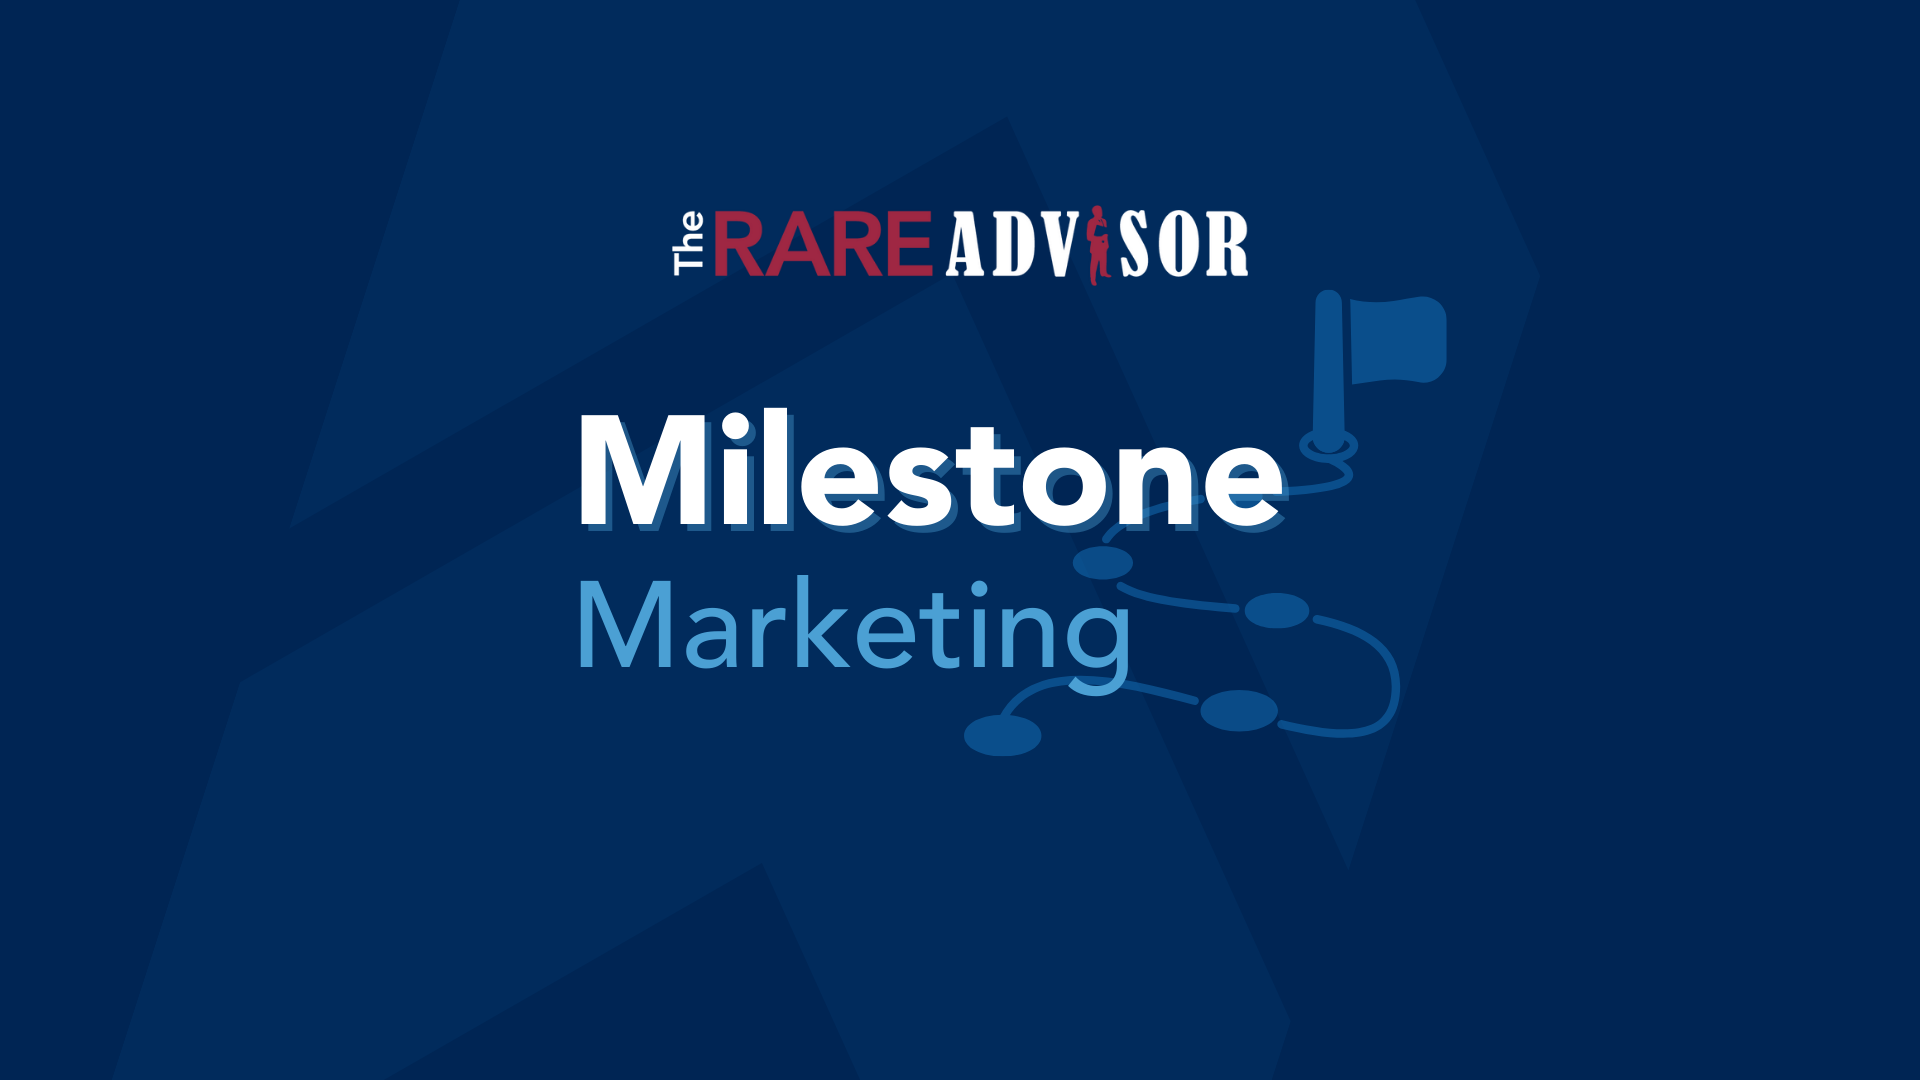 The RARE Advisor: Milestone Marketing = Home Run